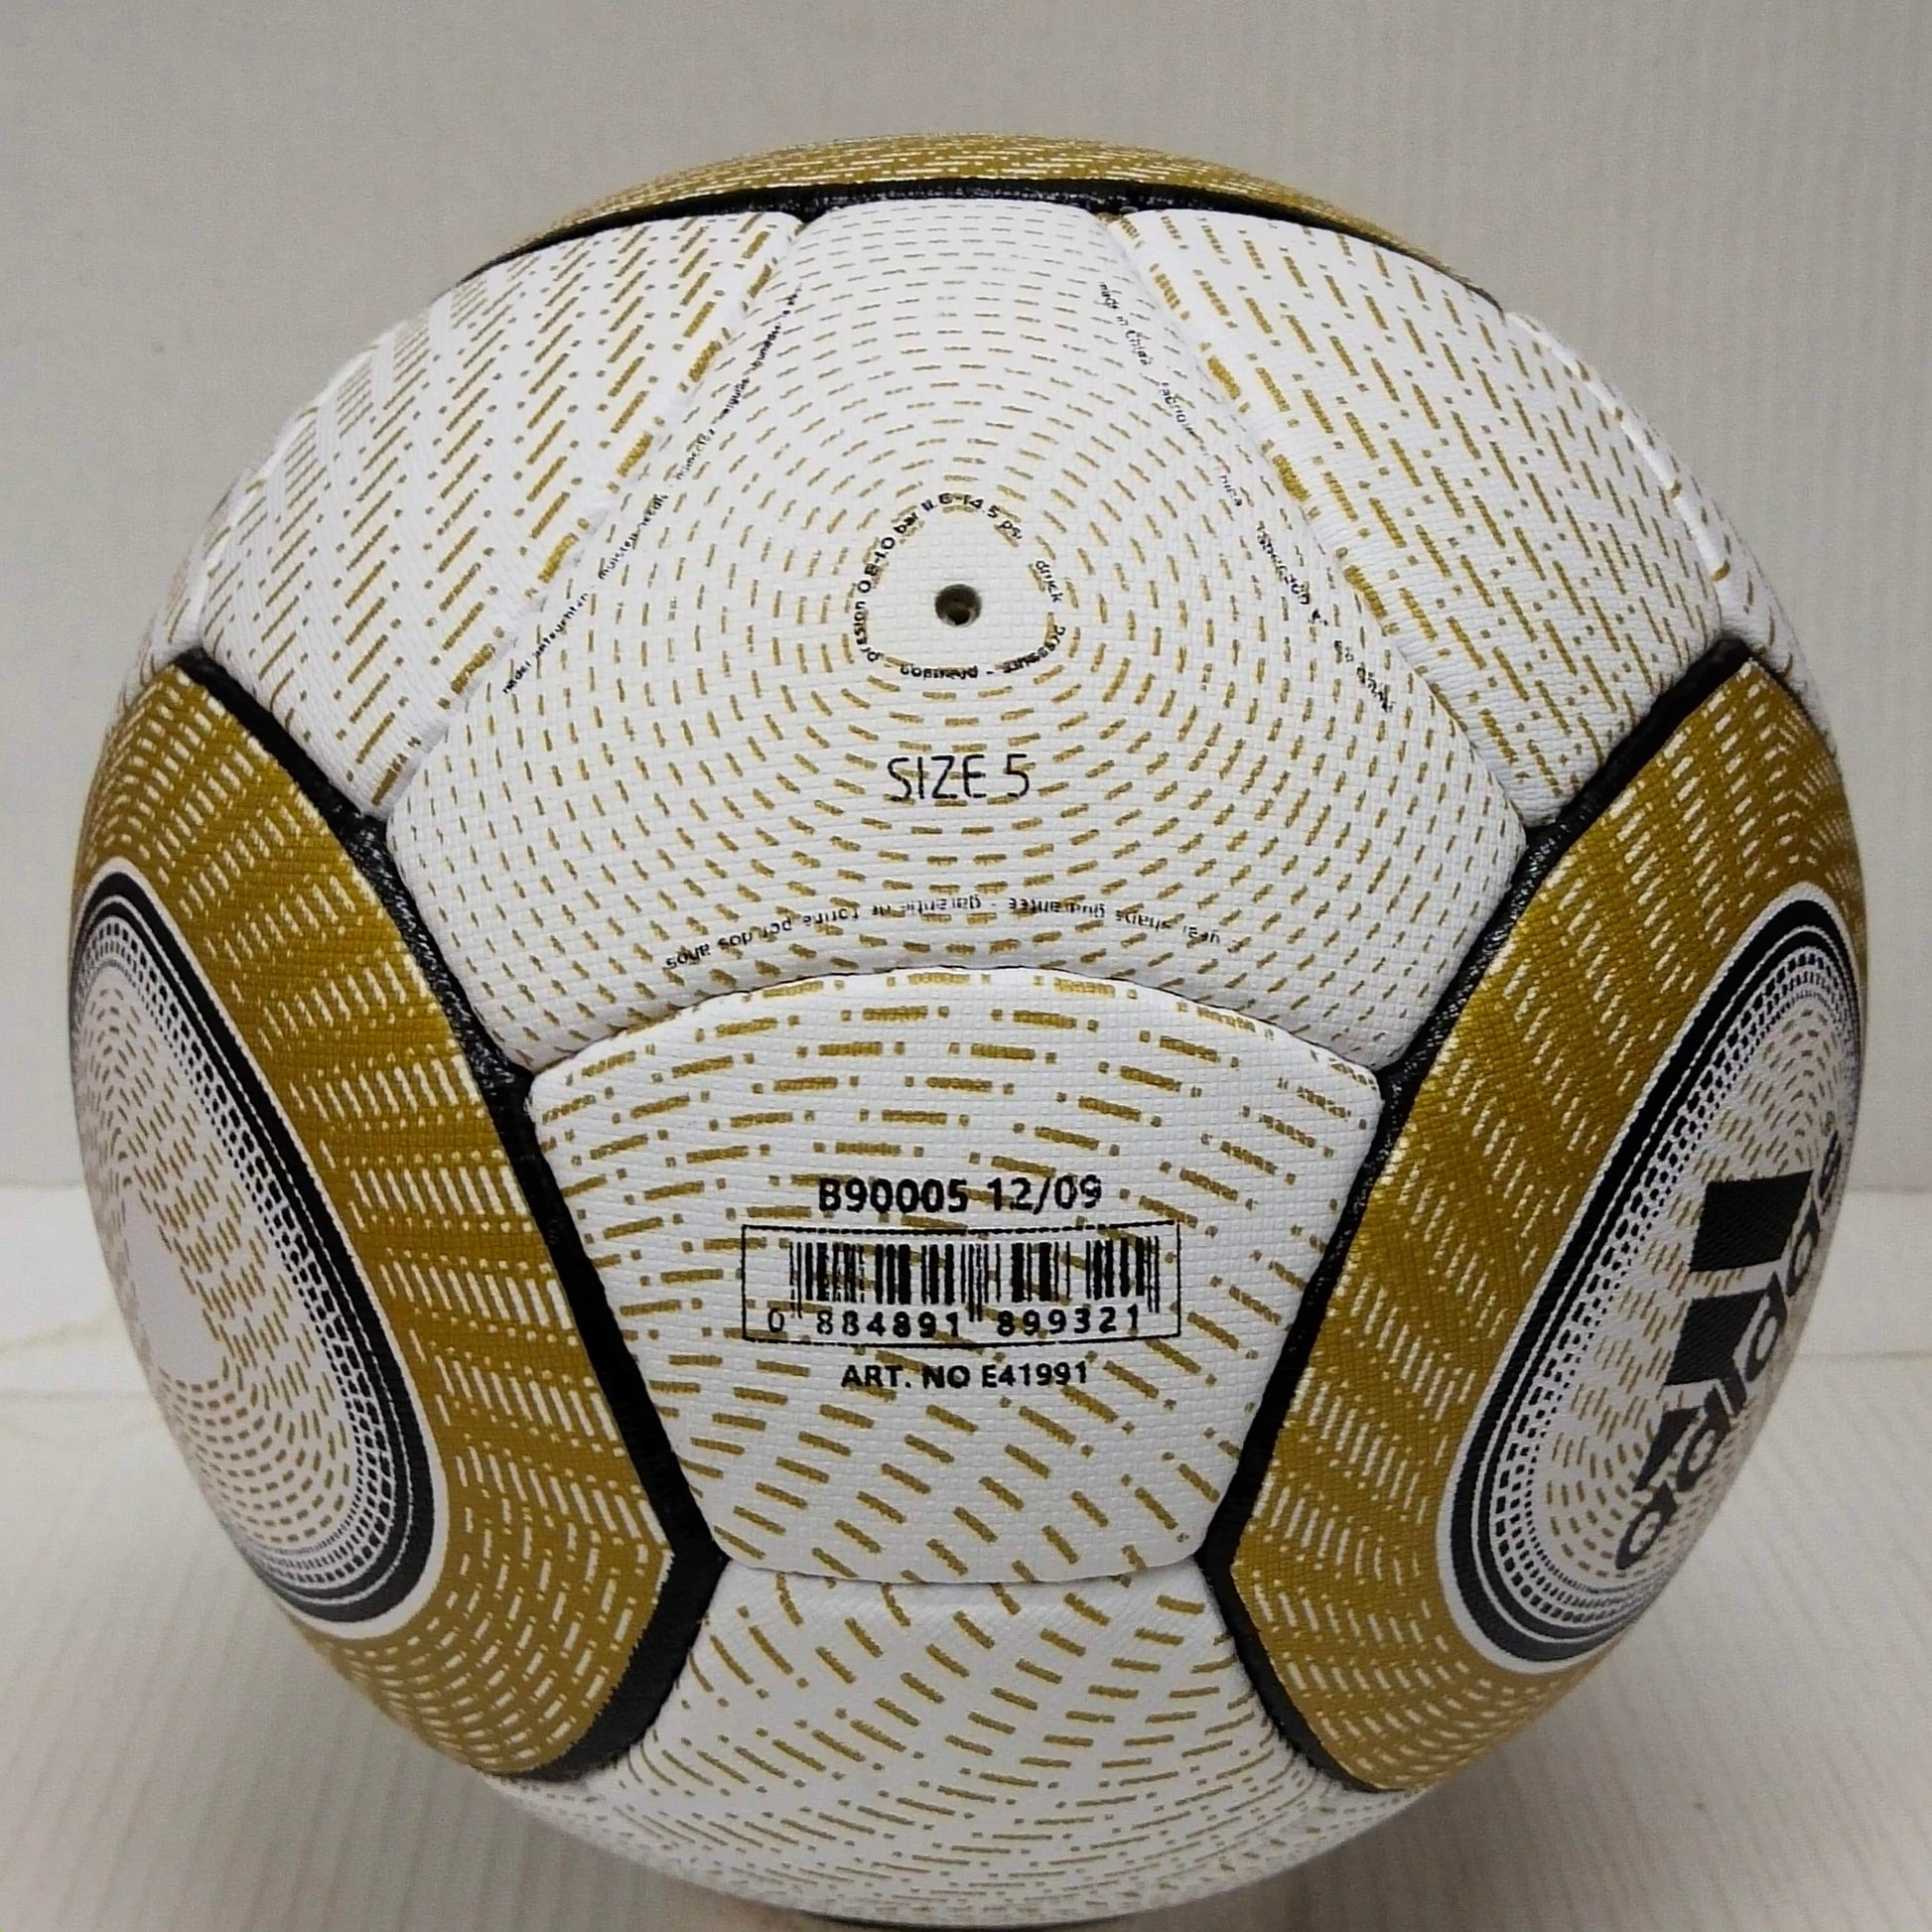 Adidas Jo'bulani | Final Ball | 2010 FIFA World Cup Ball | Second Edition | SIZE 5 02